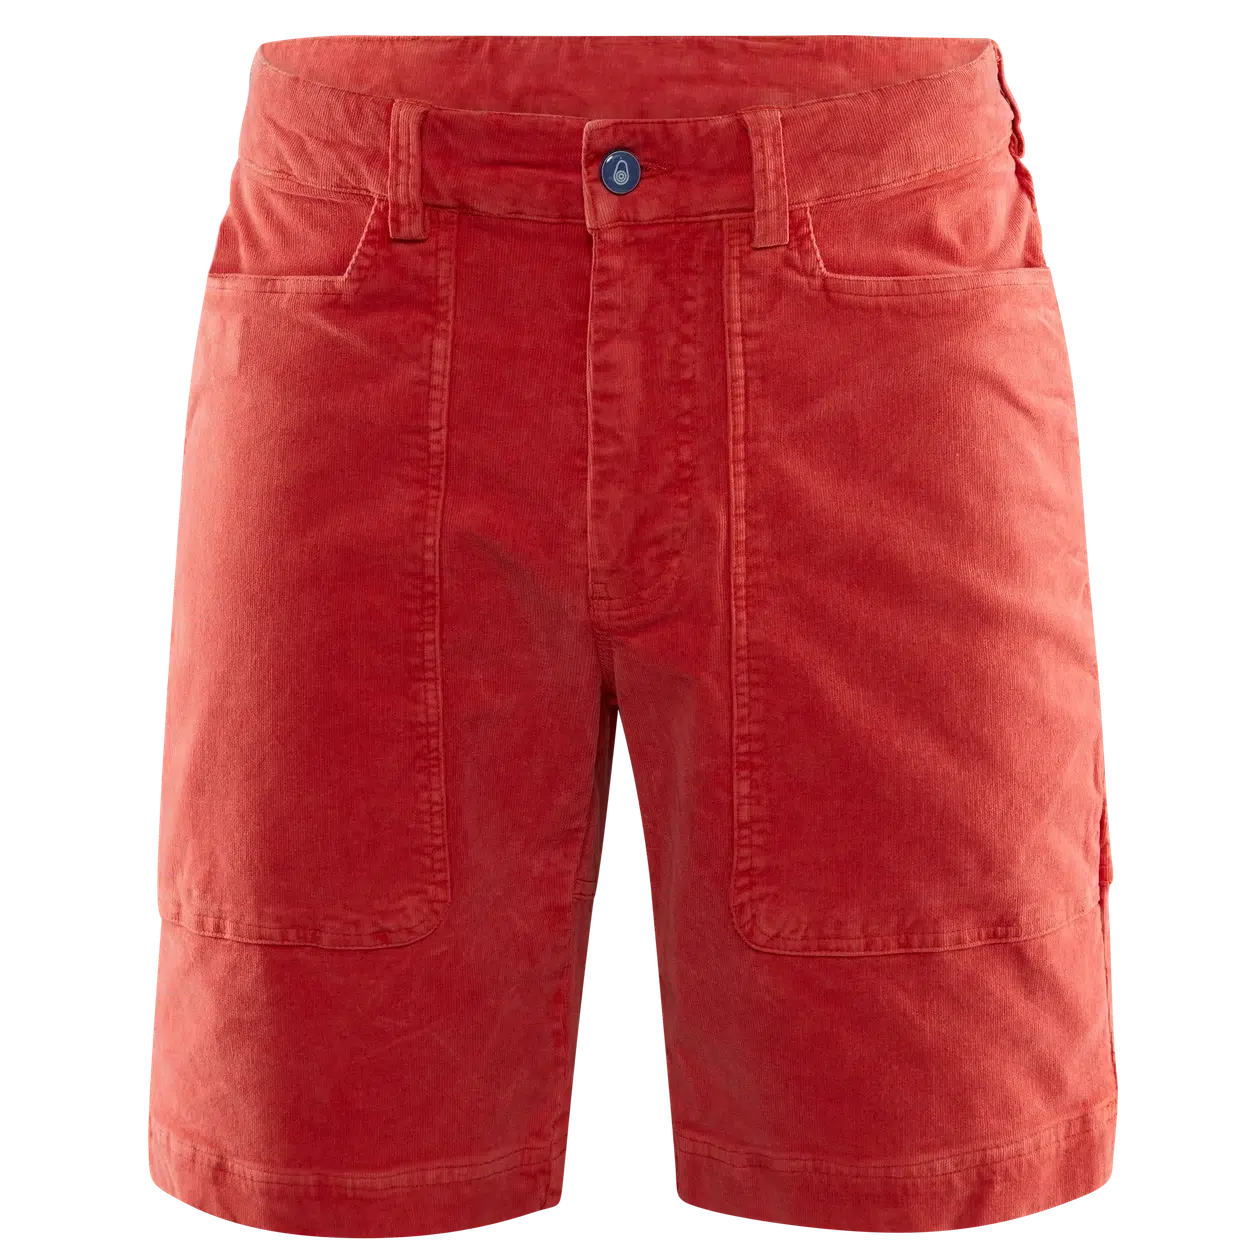 Grinder Corduroy Shorts Red